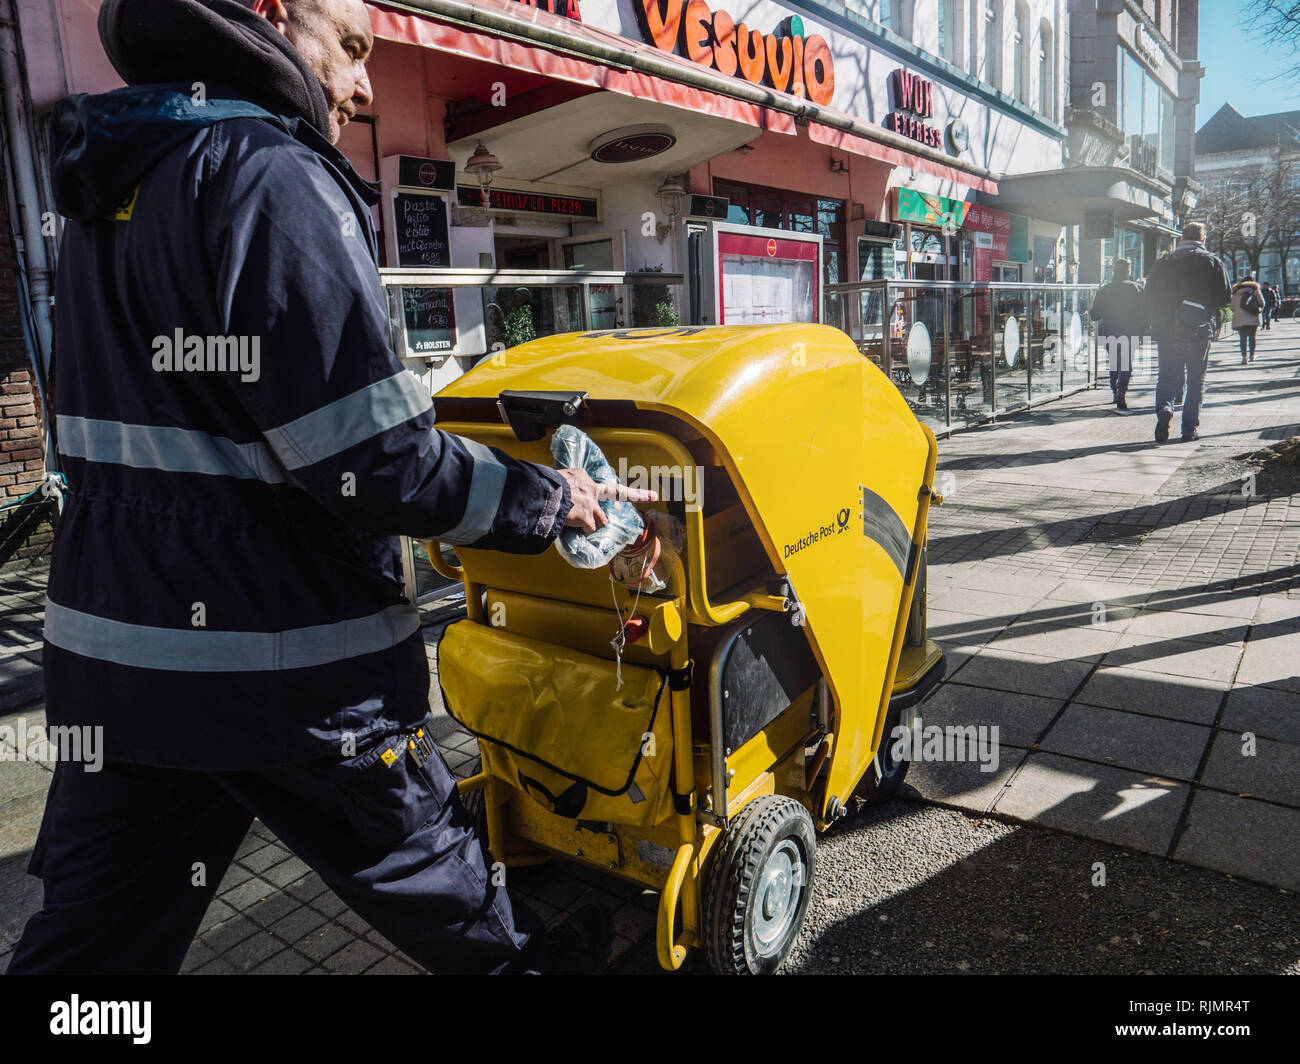 HAMBURG, GERMANY - MAR 20, 2018: Man in uniform pushing Deutsche Bank DHL German post yellow carriage with mail walking down street Stock Photo